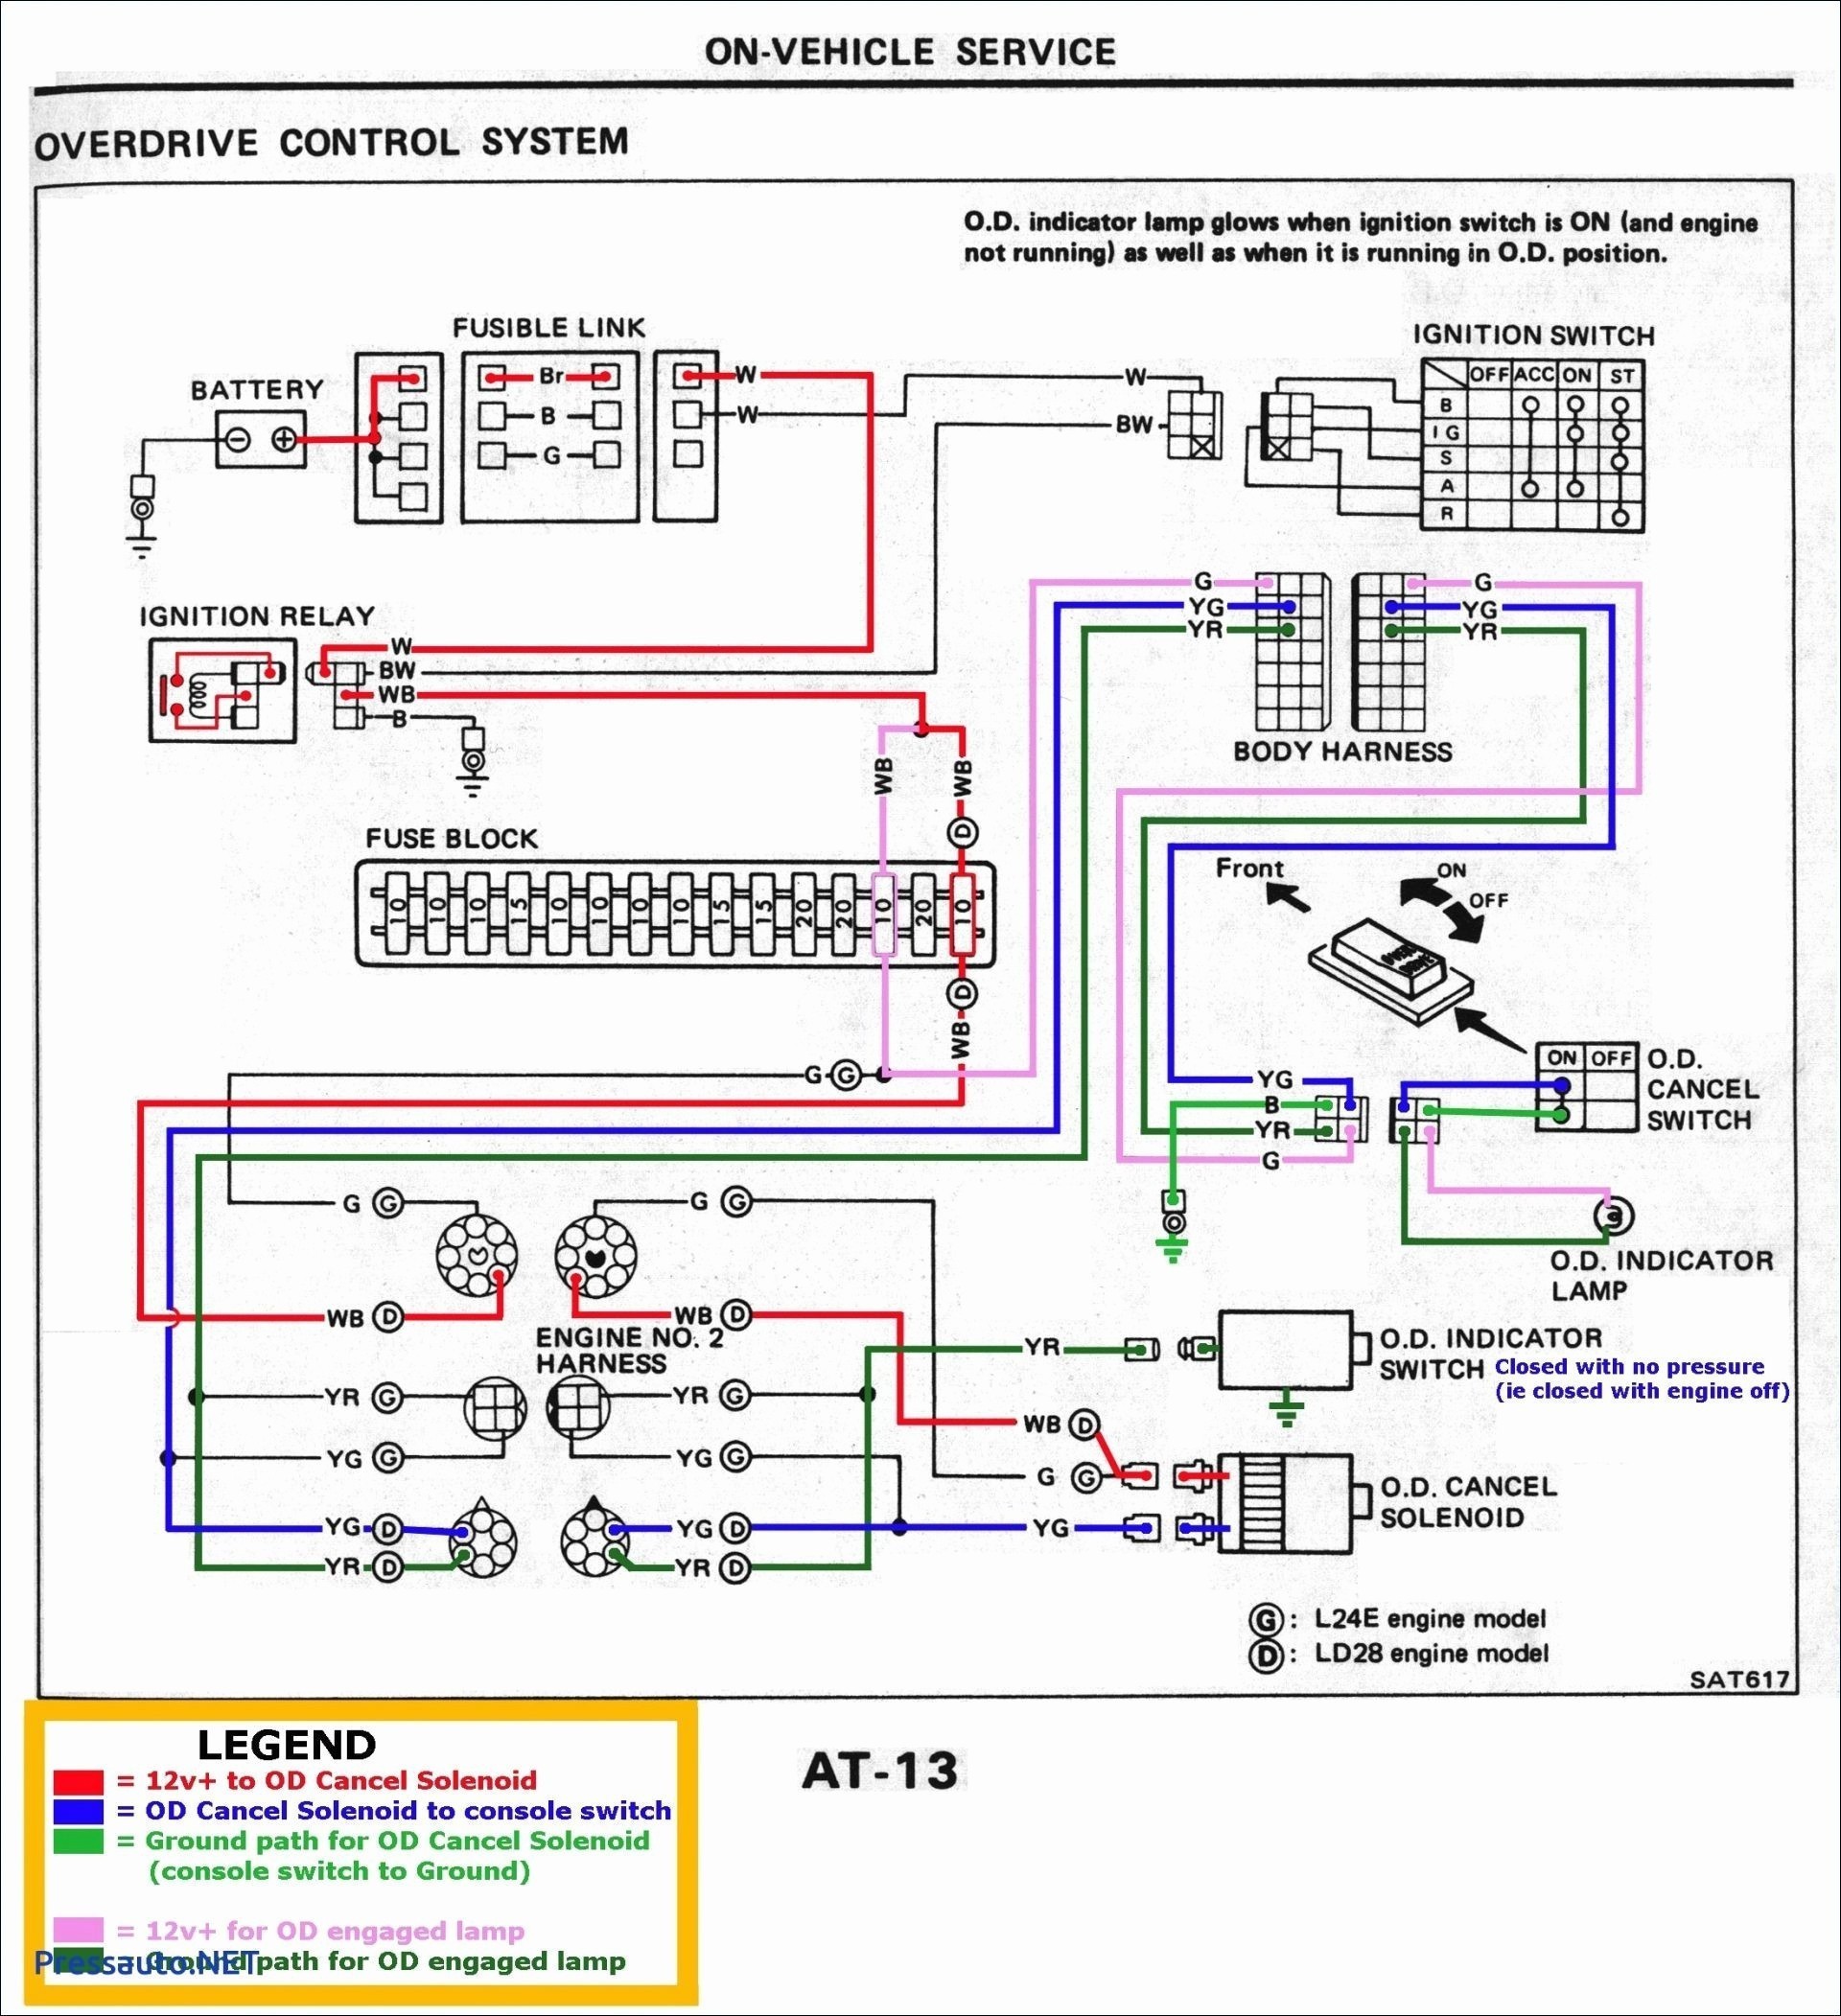 General Electric Motor Wiring Diagram 2 Wiring Diagram for Ge Dryer Motor Save Hotpoint Dryer Timer Wiring Of General Electric Motor Wiring Diagram 2